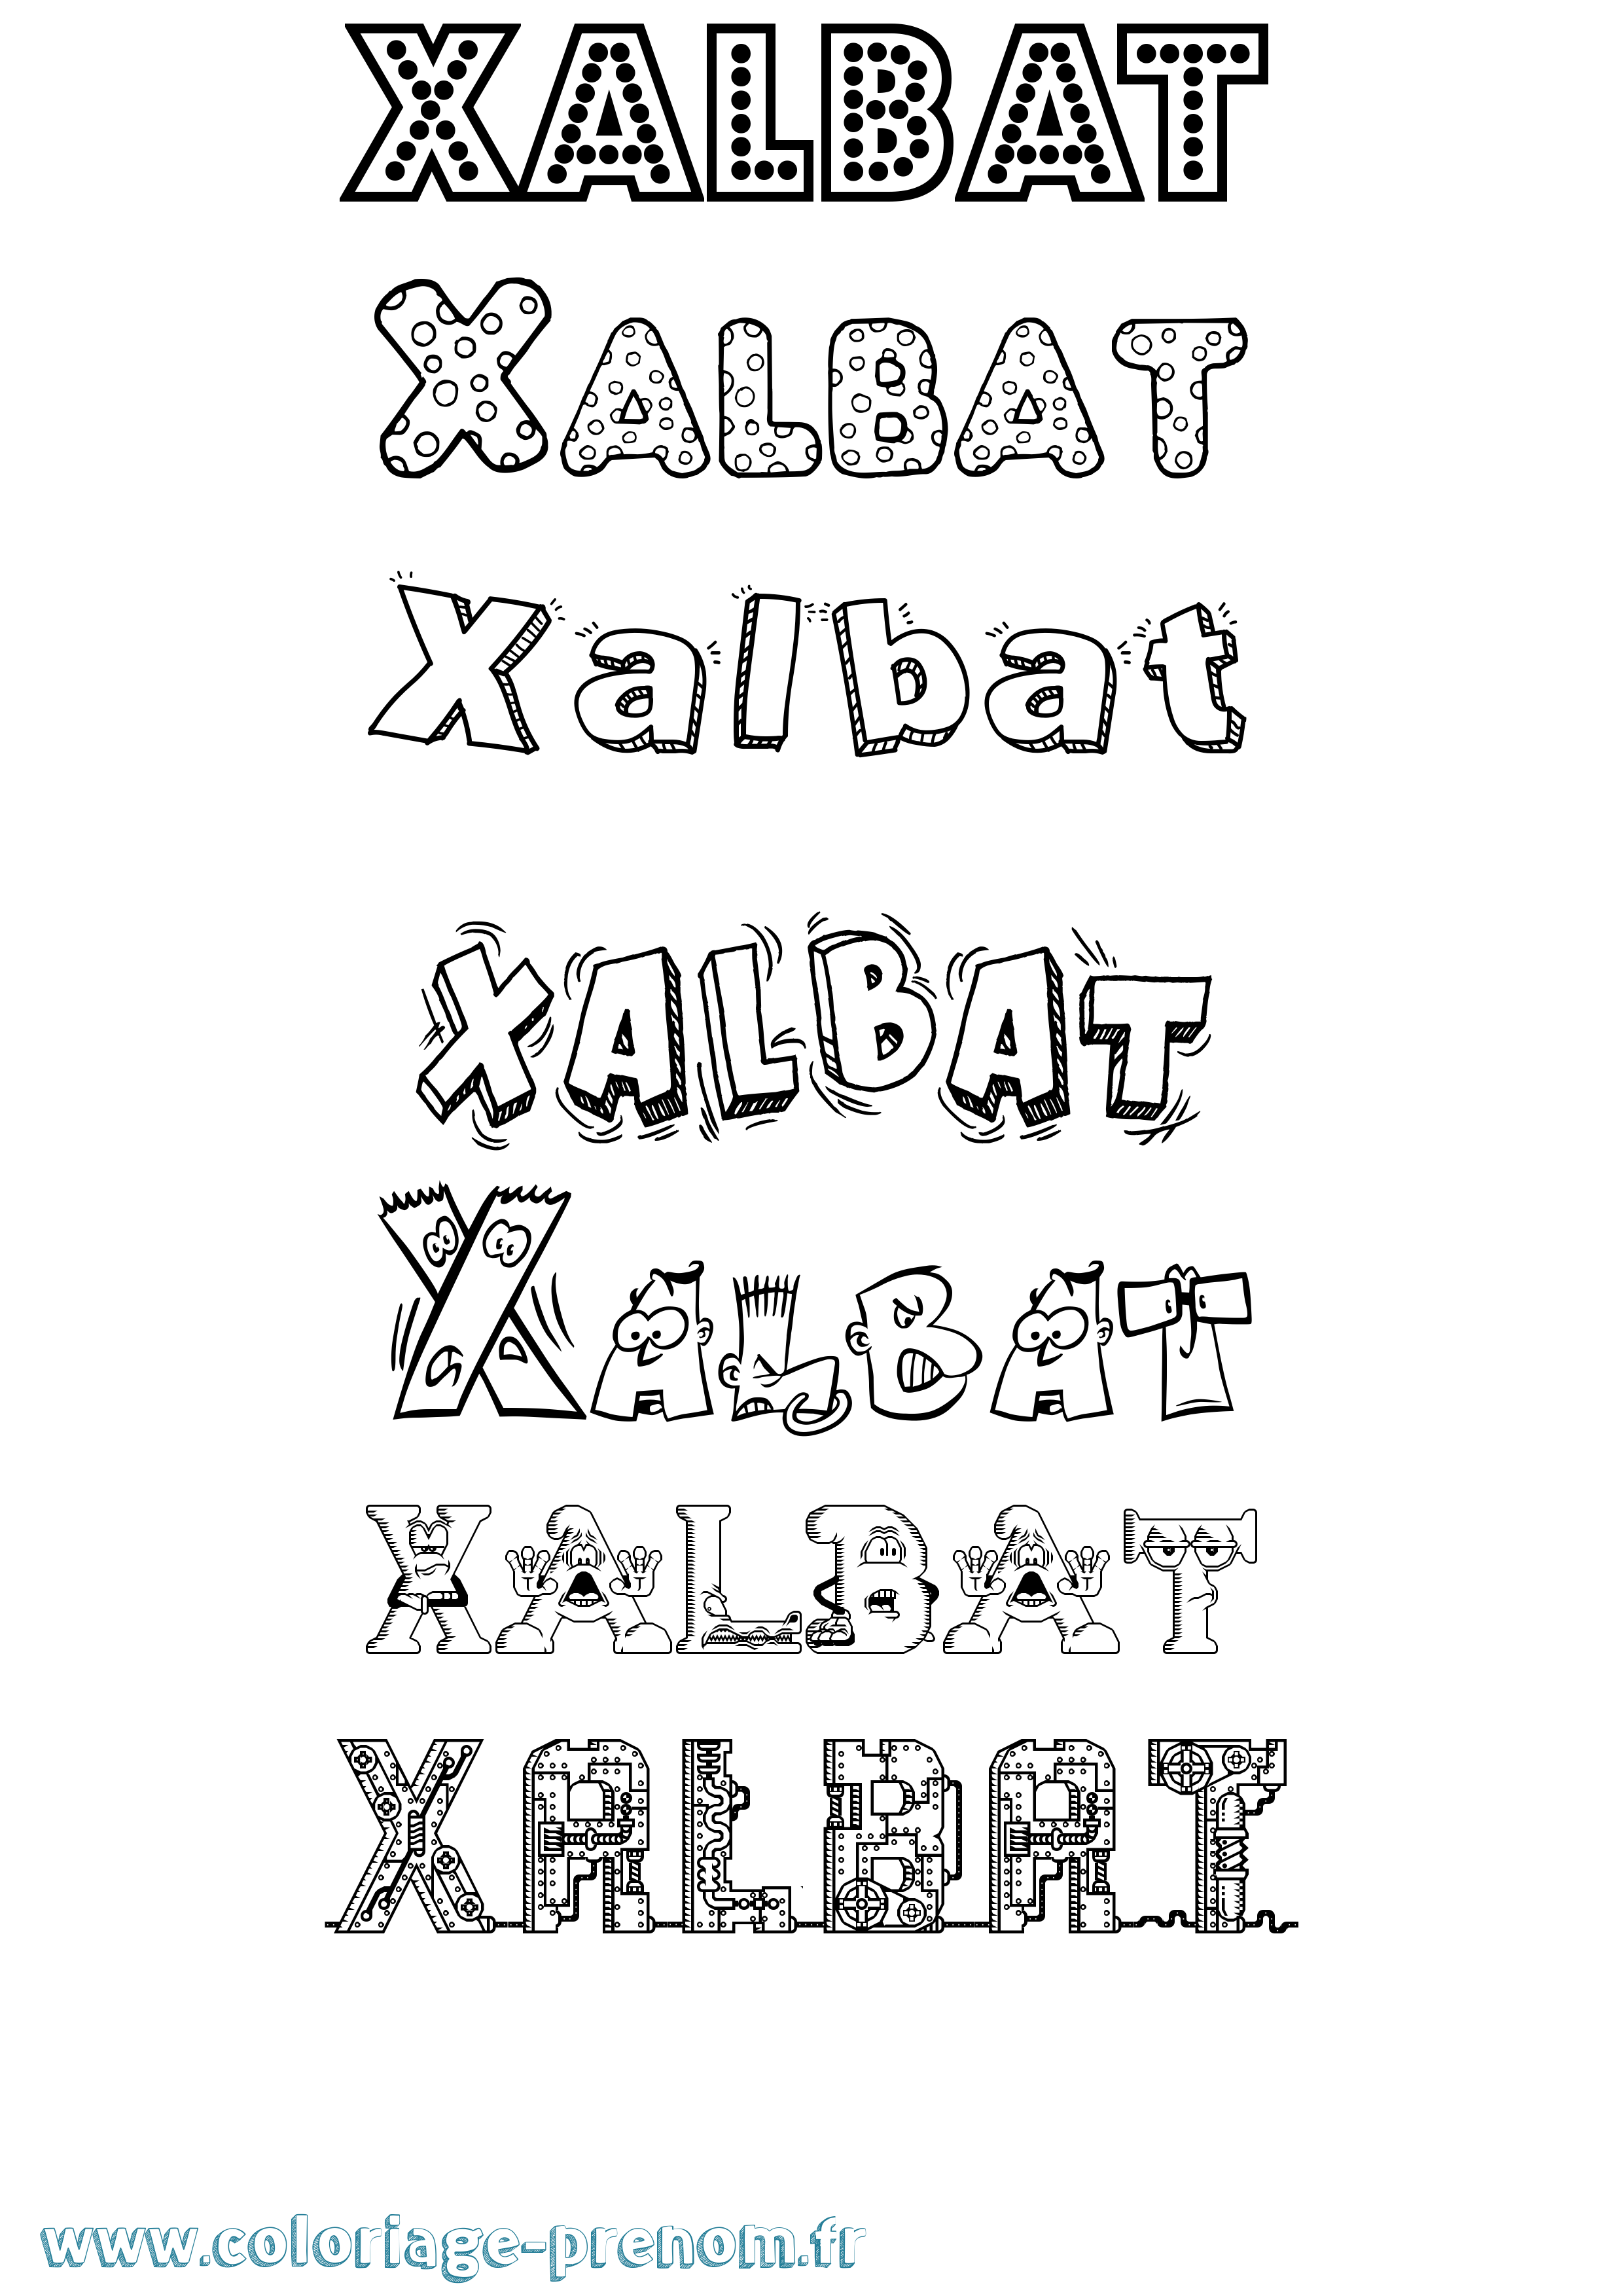 Coloriage prénom Xalbat Fun